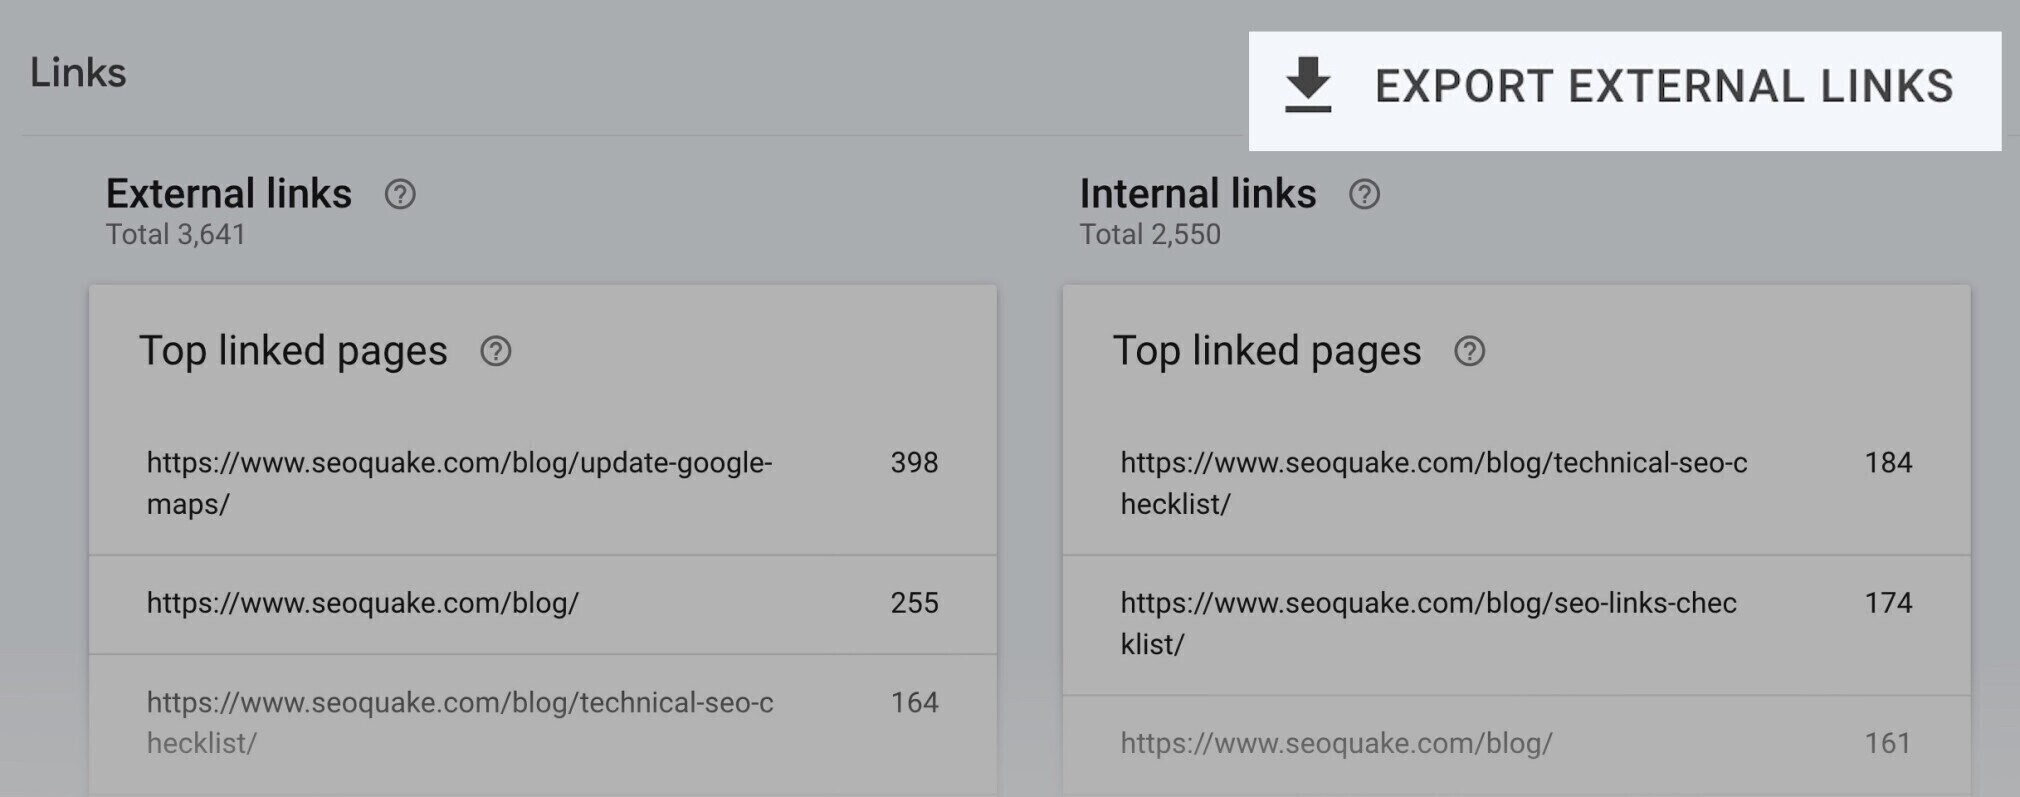 google search console - exportar links externos